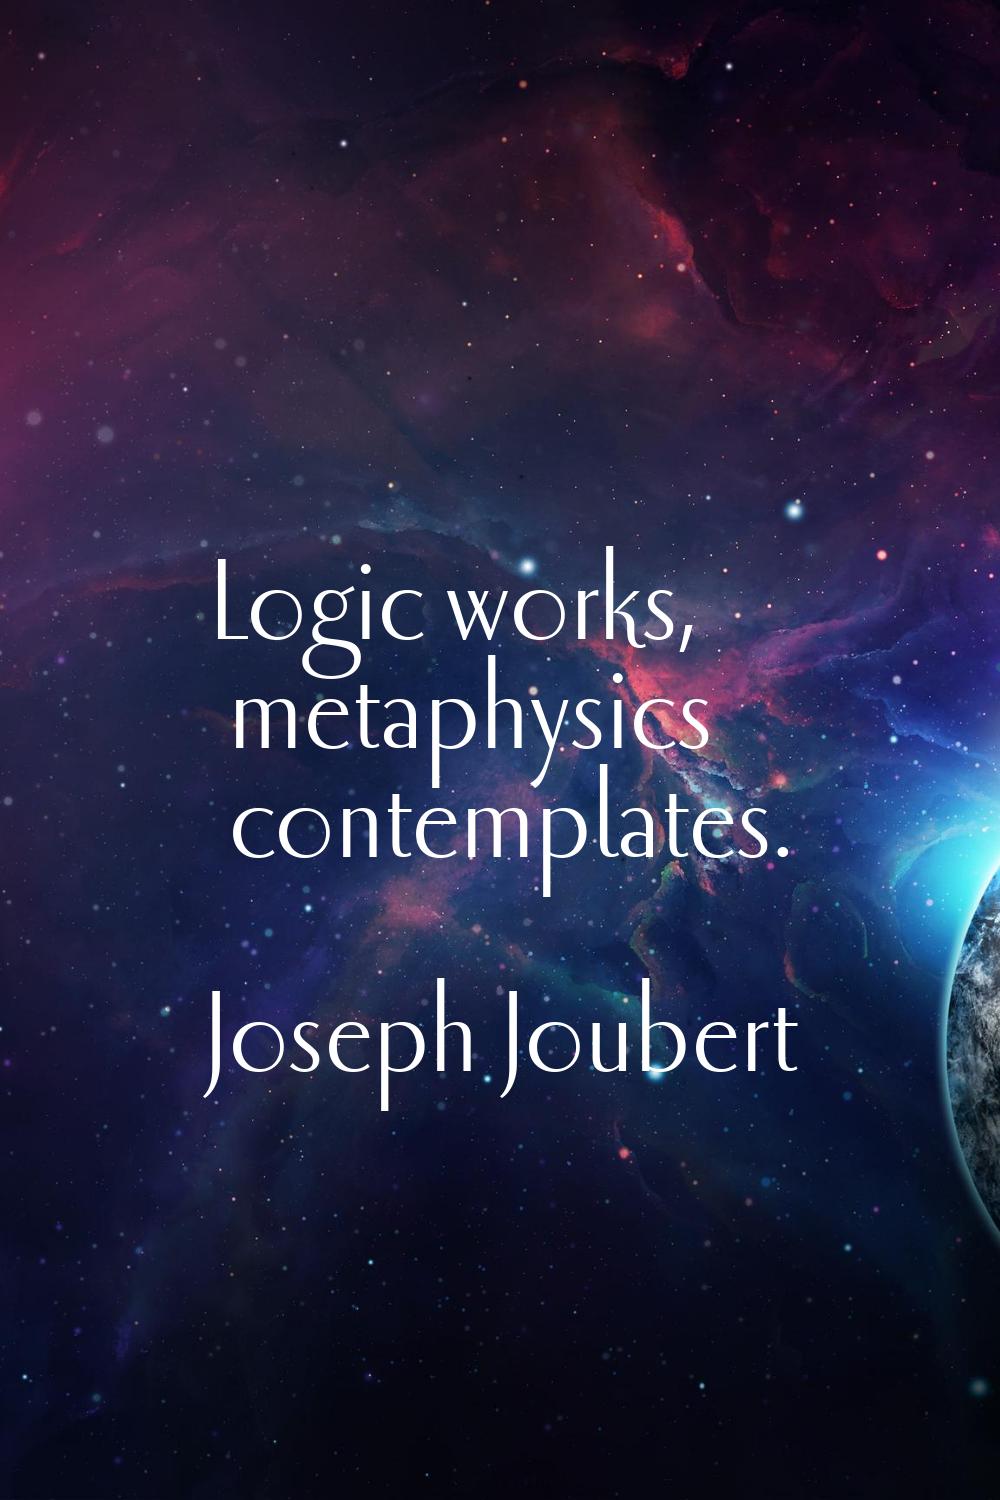 Logic works, metaphysics contemplates.